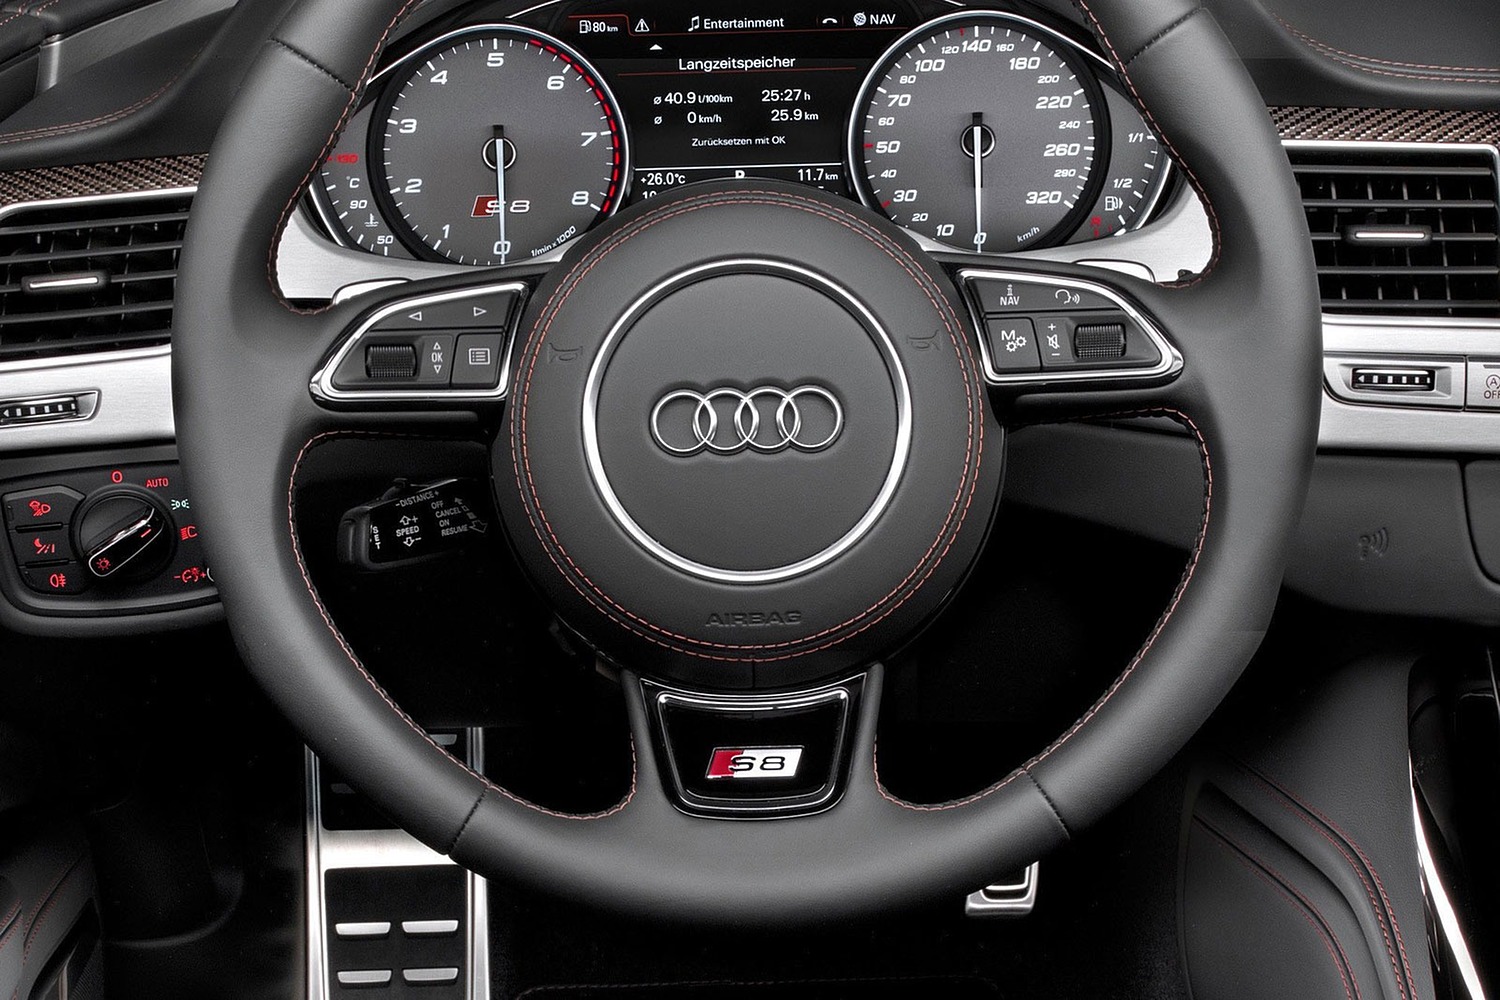 Audi S8 plus quattro Sedan Steering Wheel Detail (2016 model year shown)